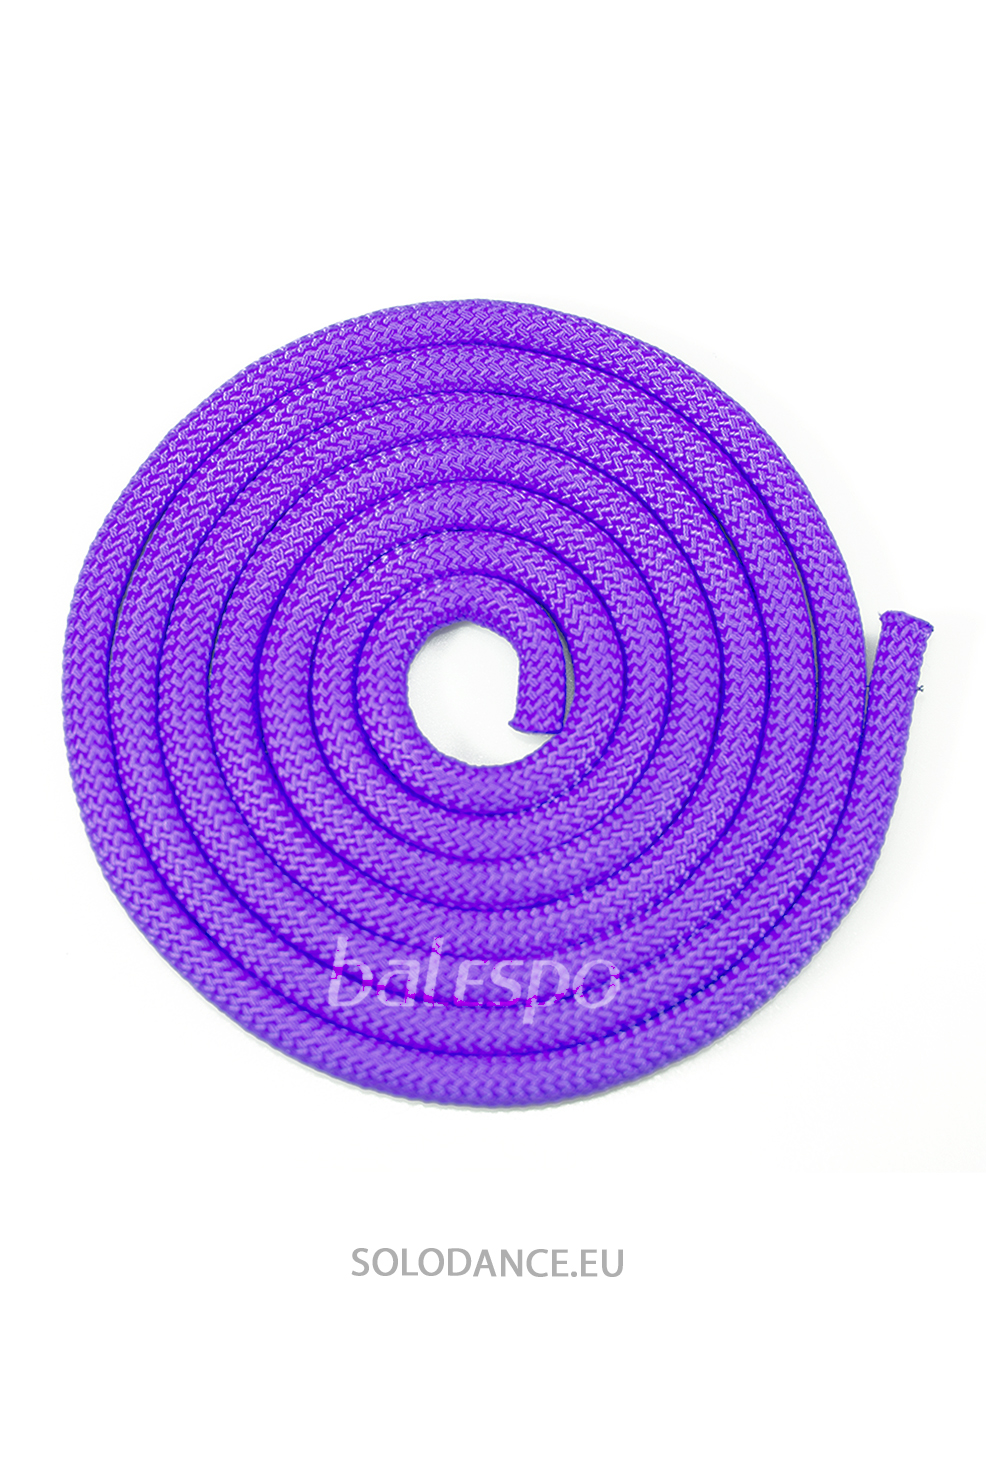 Gymnastic rope BALESPO purple 3 m